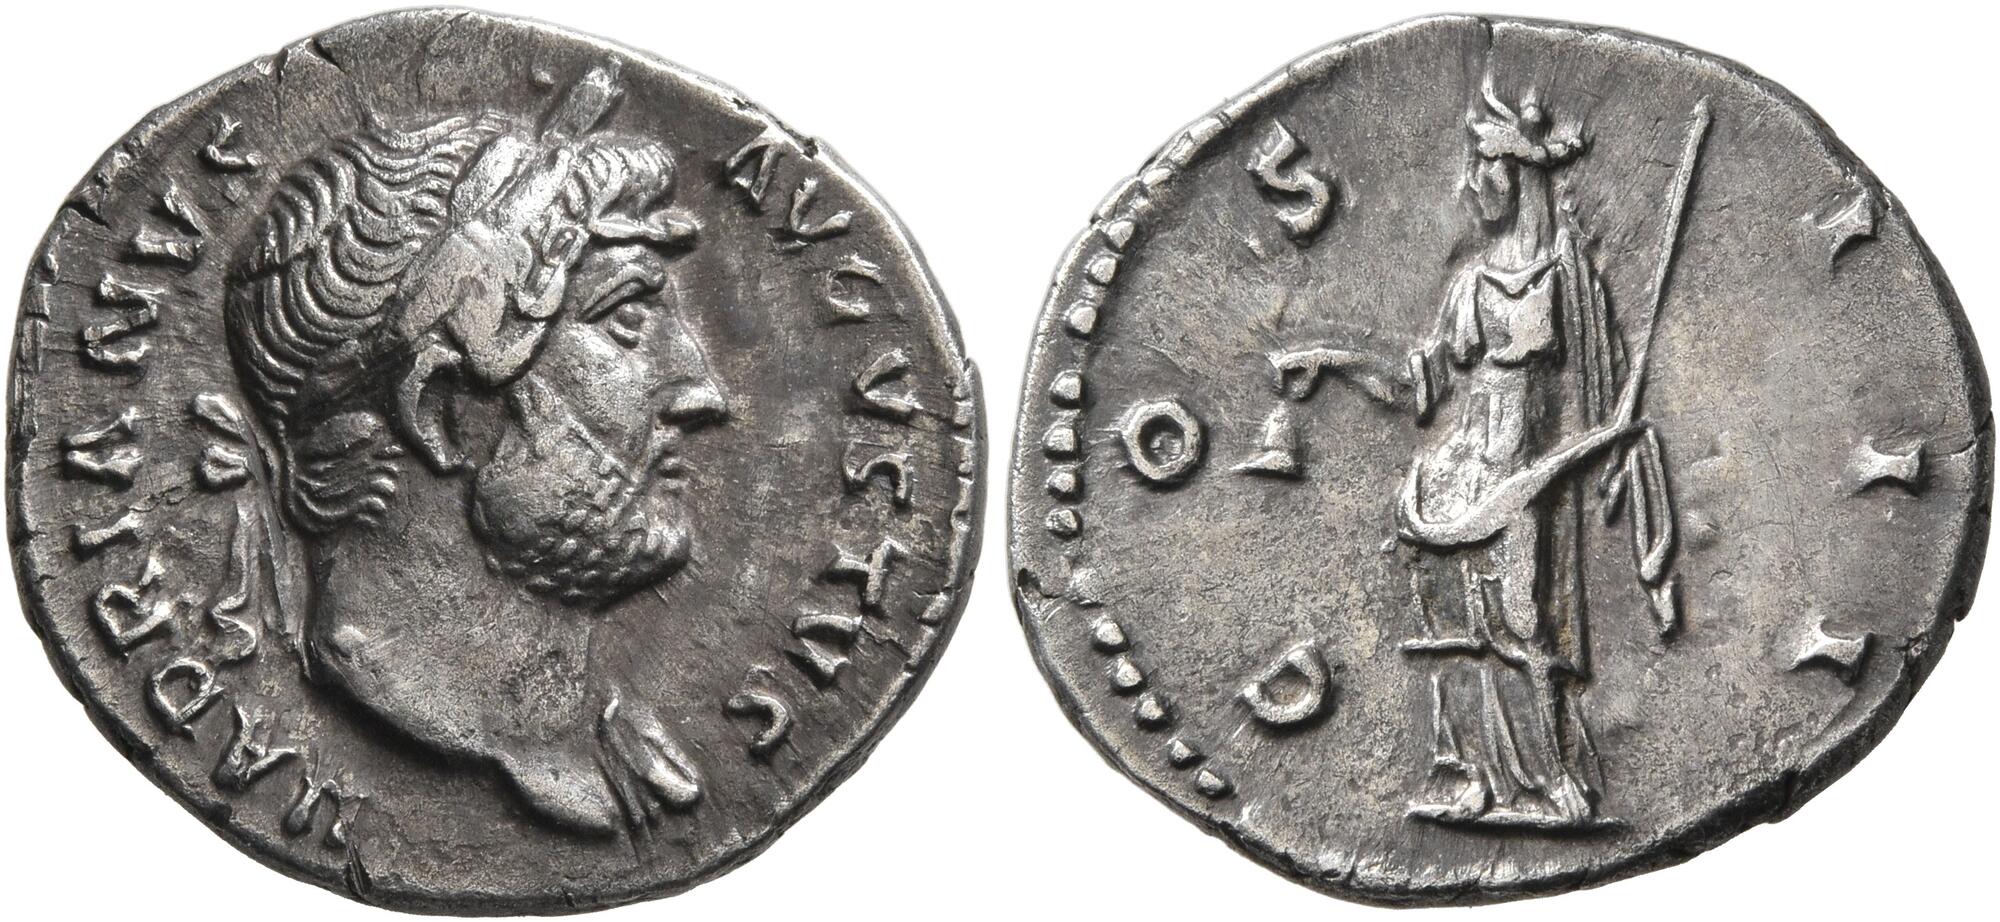 SALE／94%OFF】 アンティークコイン コイン 金貨 銀貨 送料無料 Ancient Roman Hadrian AR Denarius Coin  117-138 AD Certified NGC VF